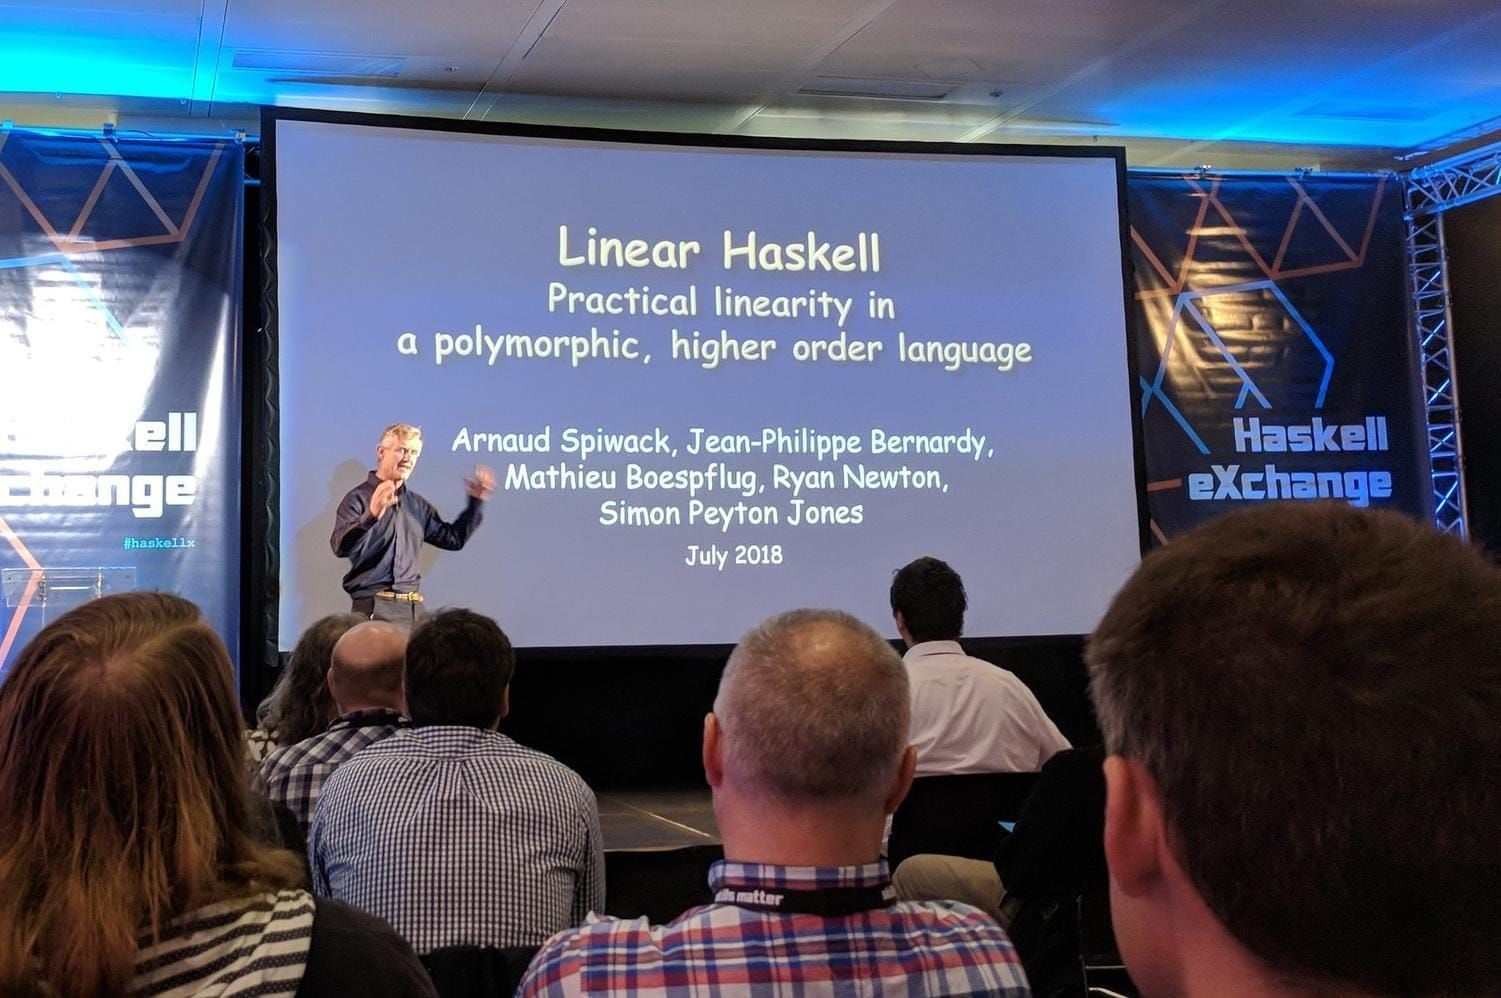 Skills Matter's Haskell eXchange